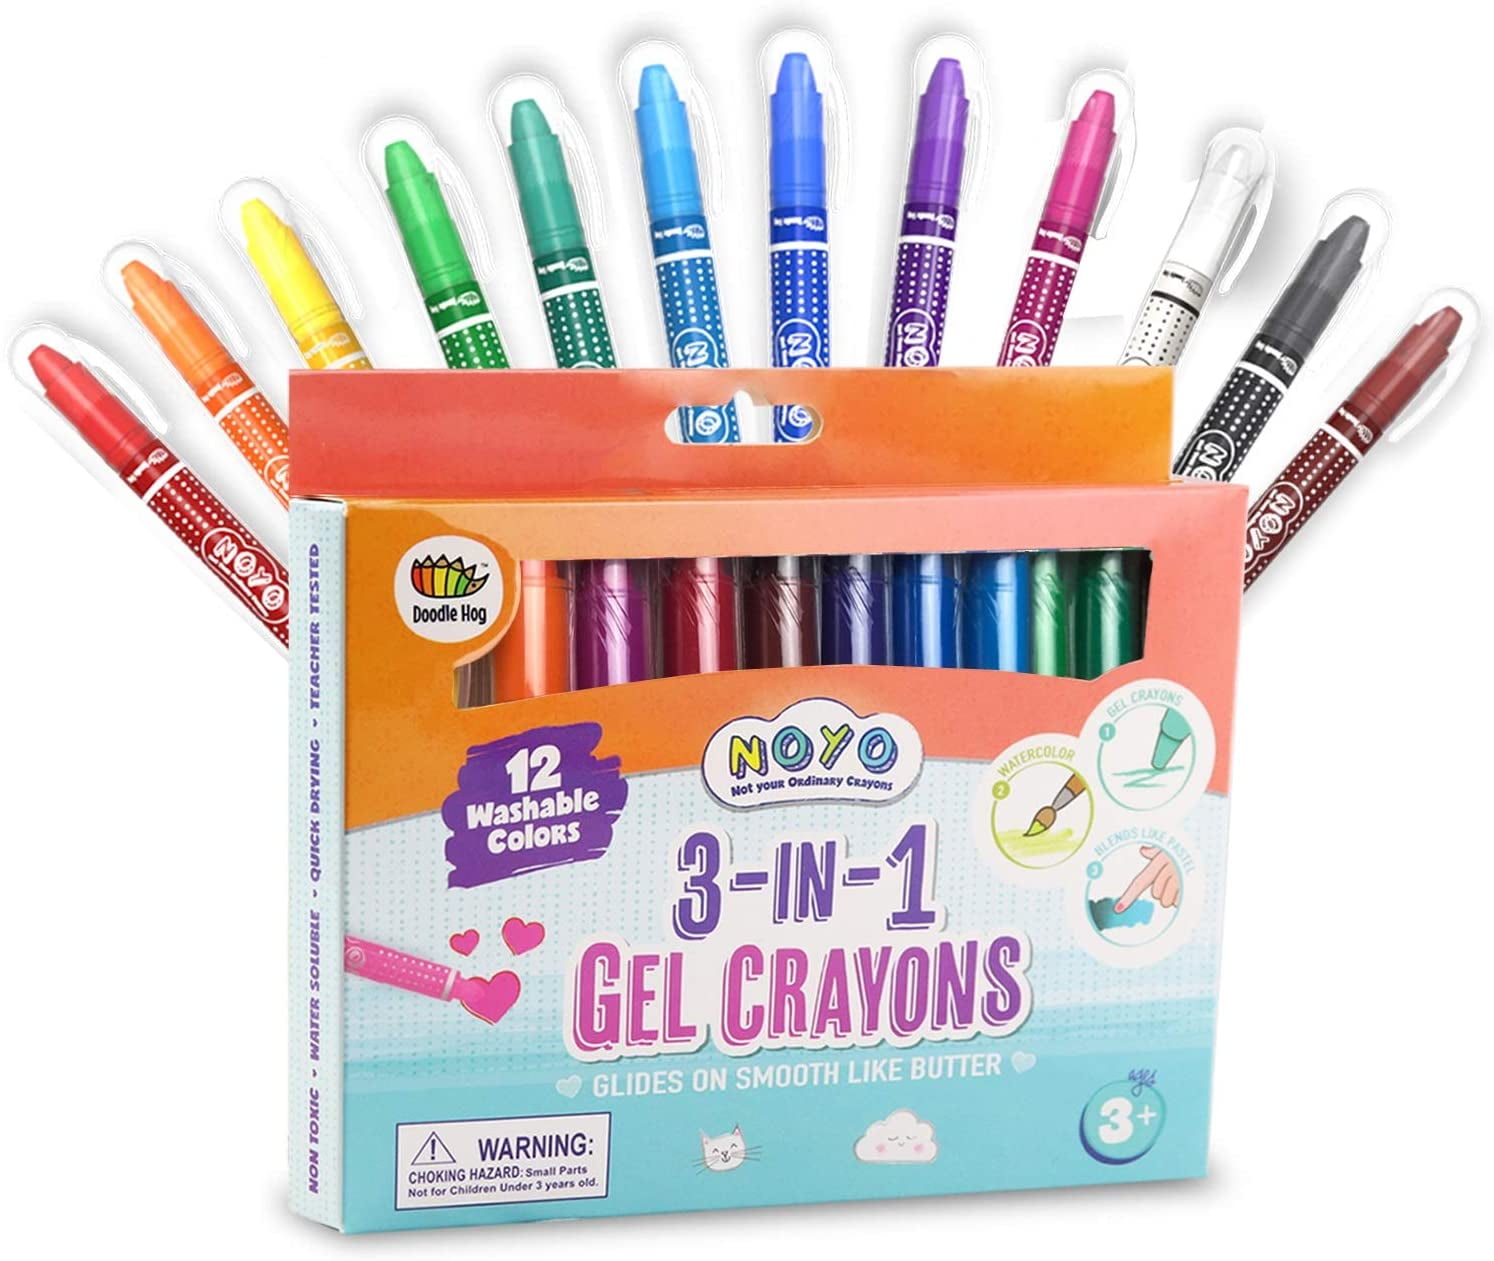 YPLUS Crayon Pen-type Children's Non-toxic Crayon Set Gift (12 Colors Set)